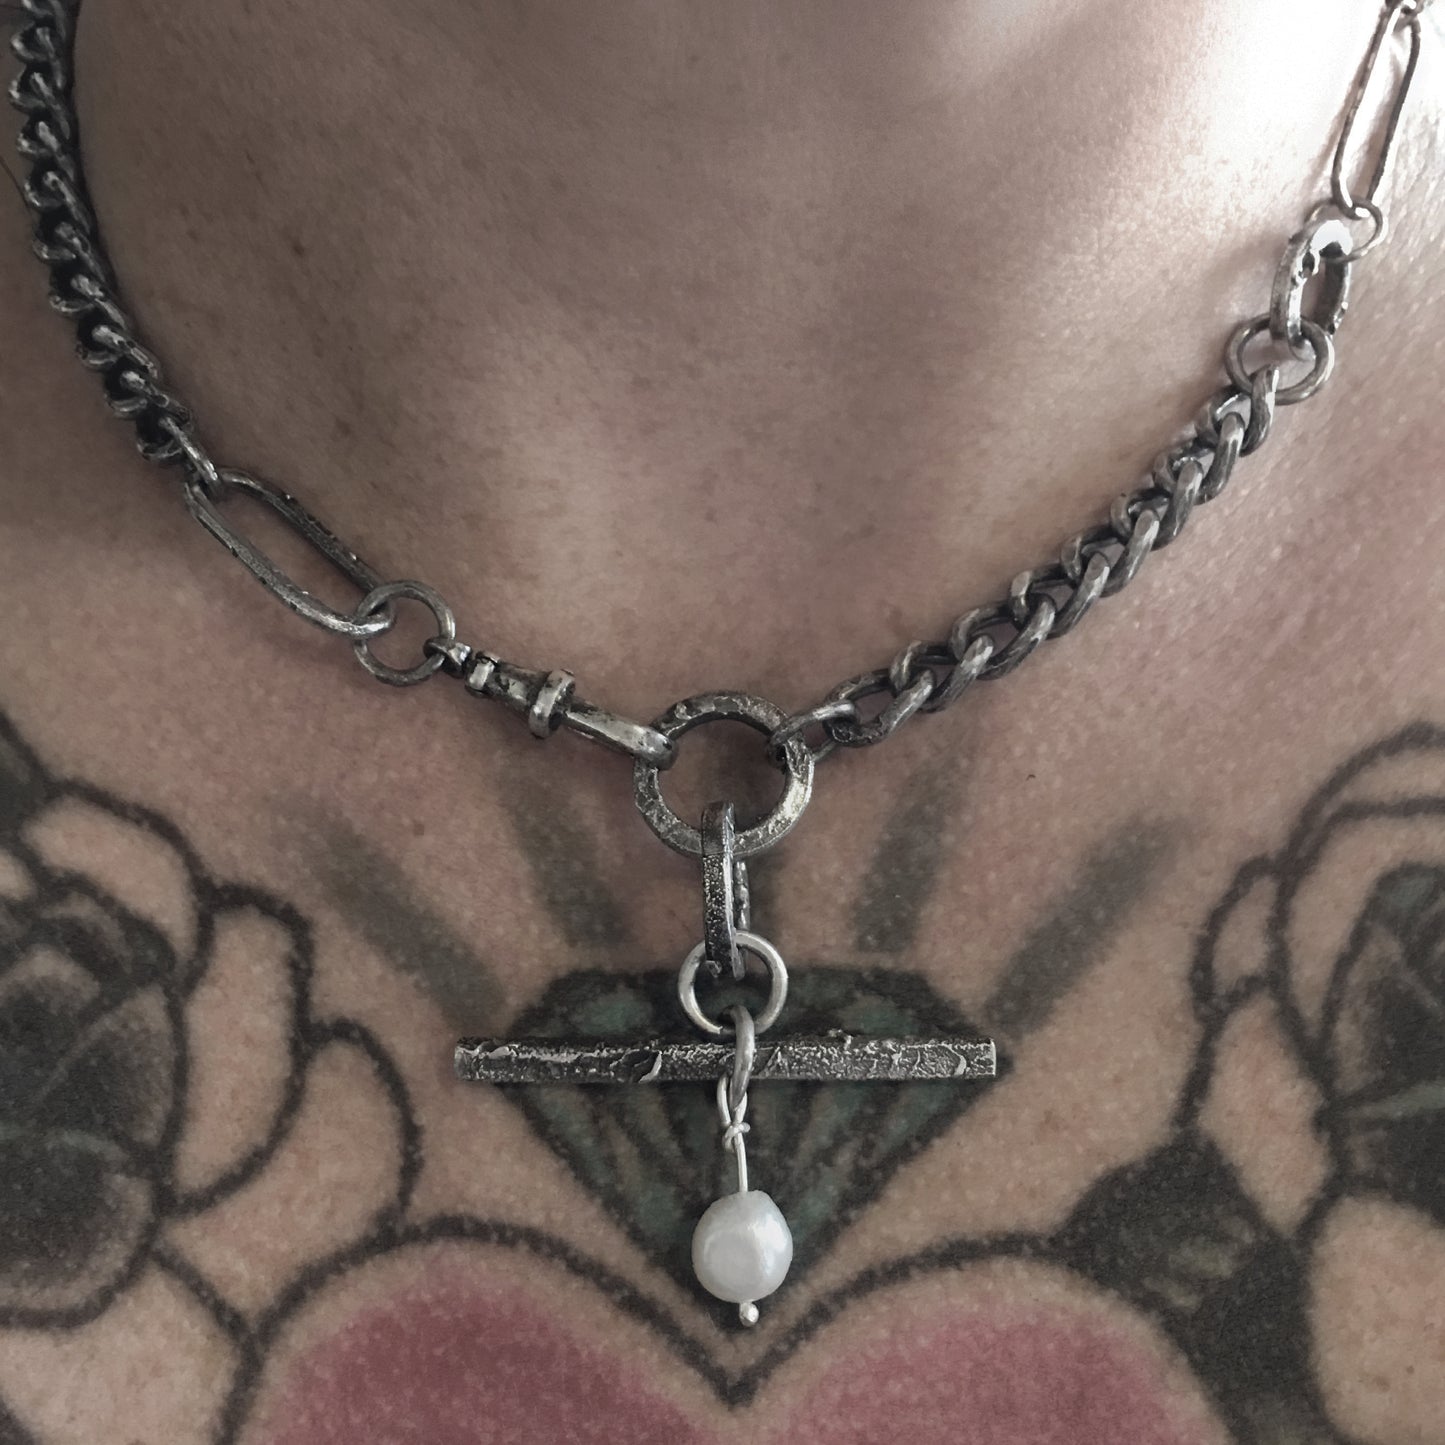 Zenith necklace